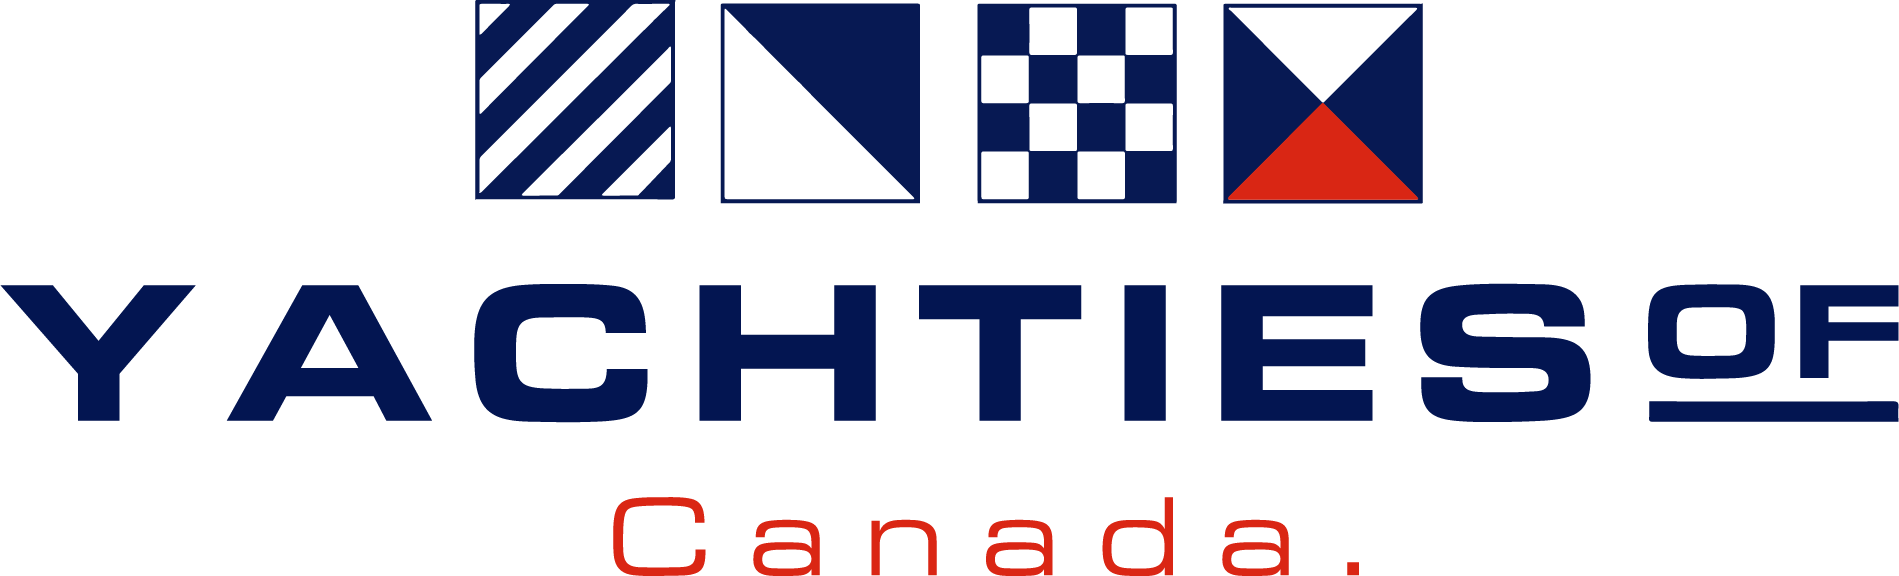 Yachties logo